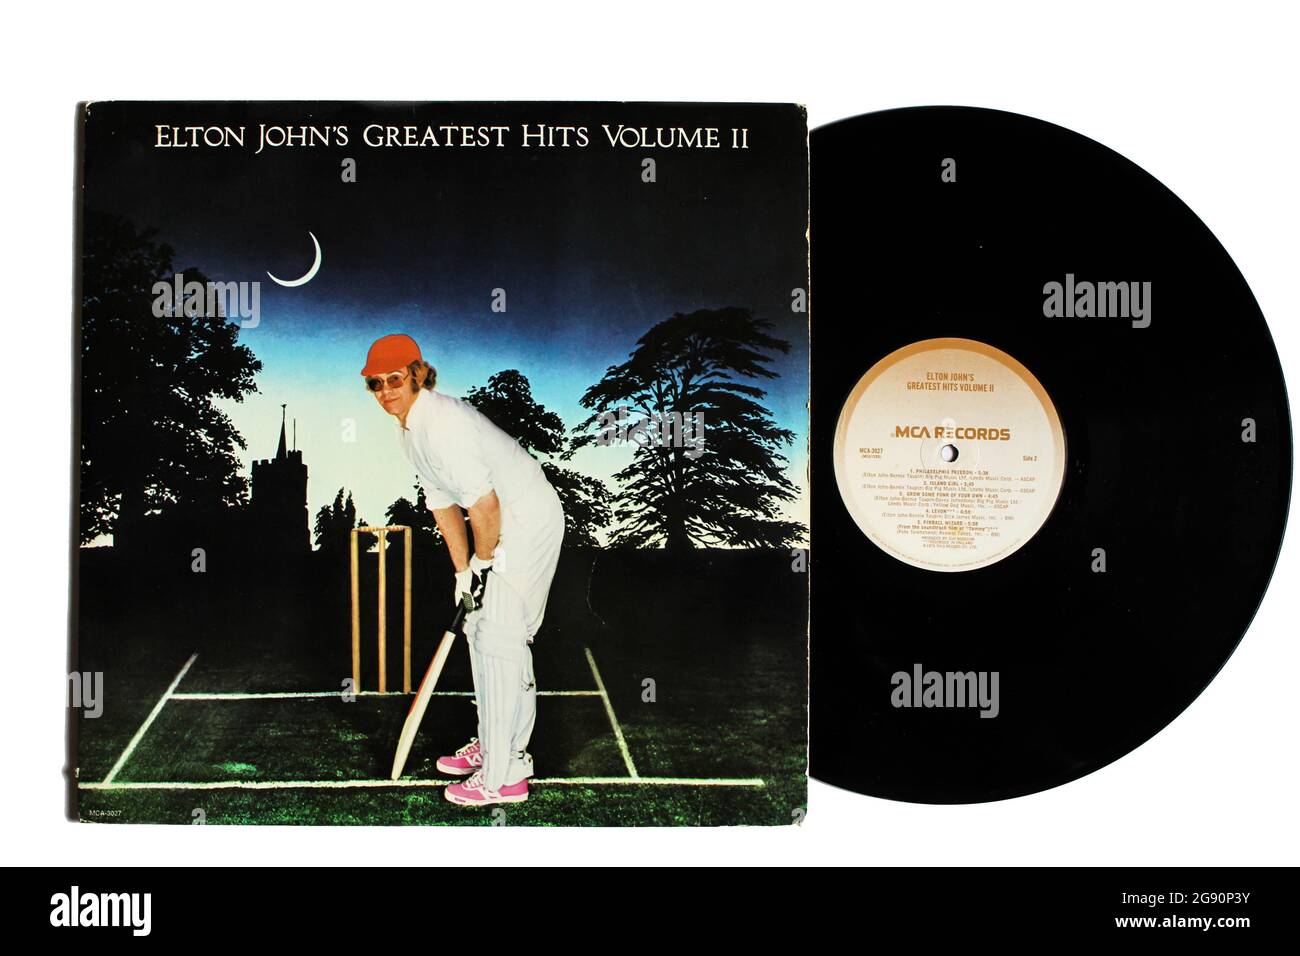 Pop and rock artist, Elton John music album on vinyl record LP disc. Titled: Elton John's Greatest Hits Volume 2 album cover Stock Photo